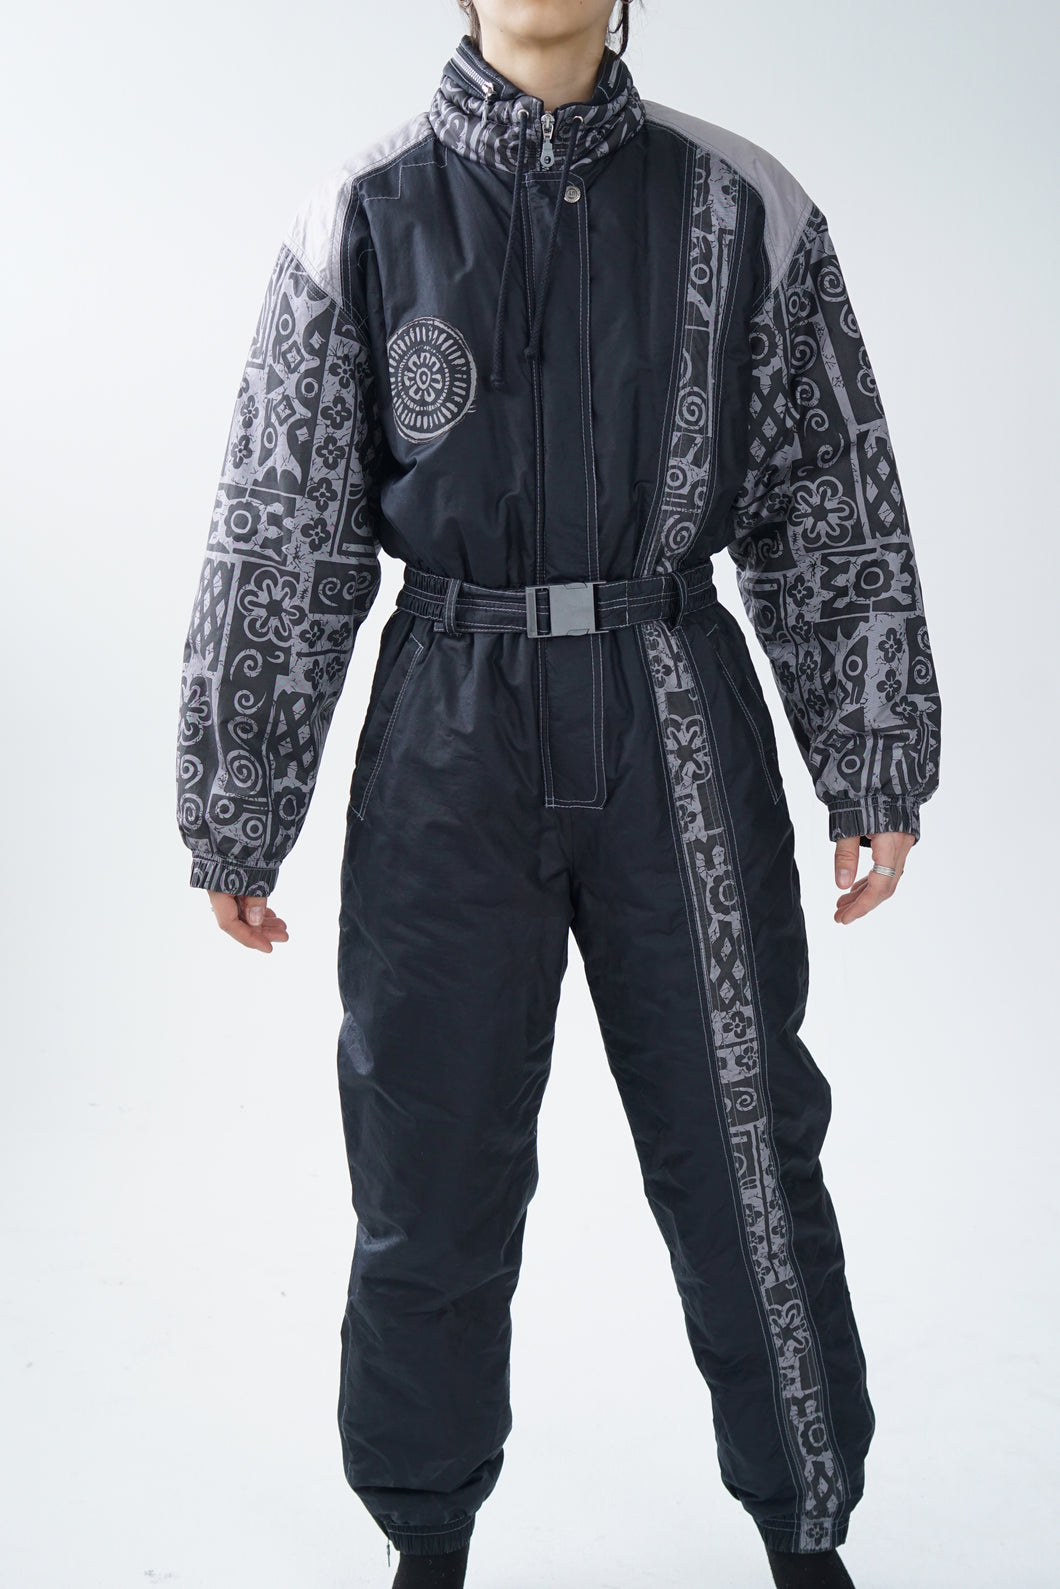 Vintage one piece AD Collection ski suit, black and grey snow suit unisex size M